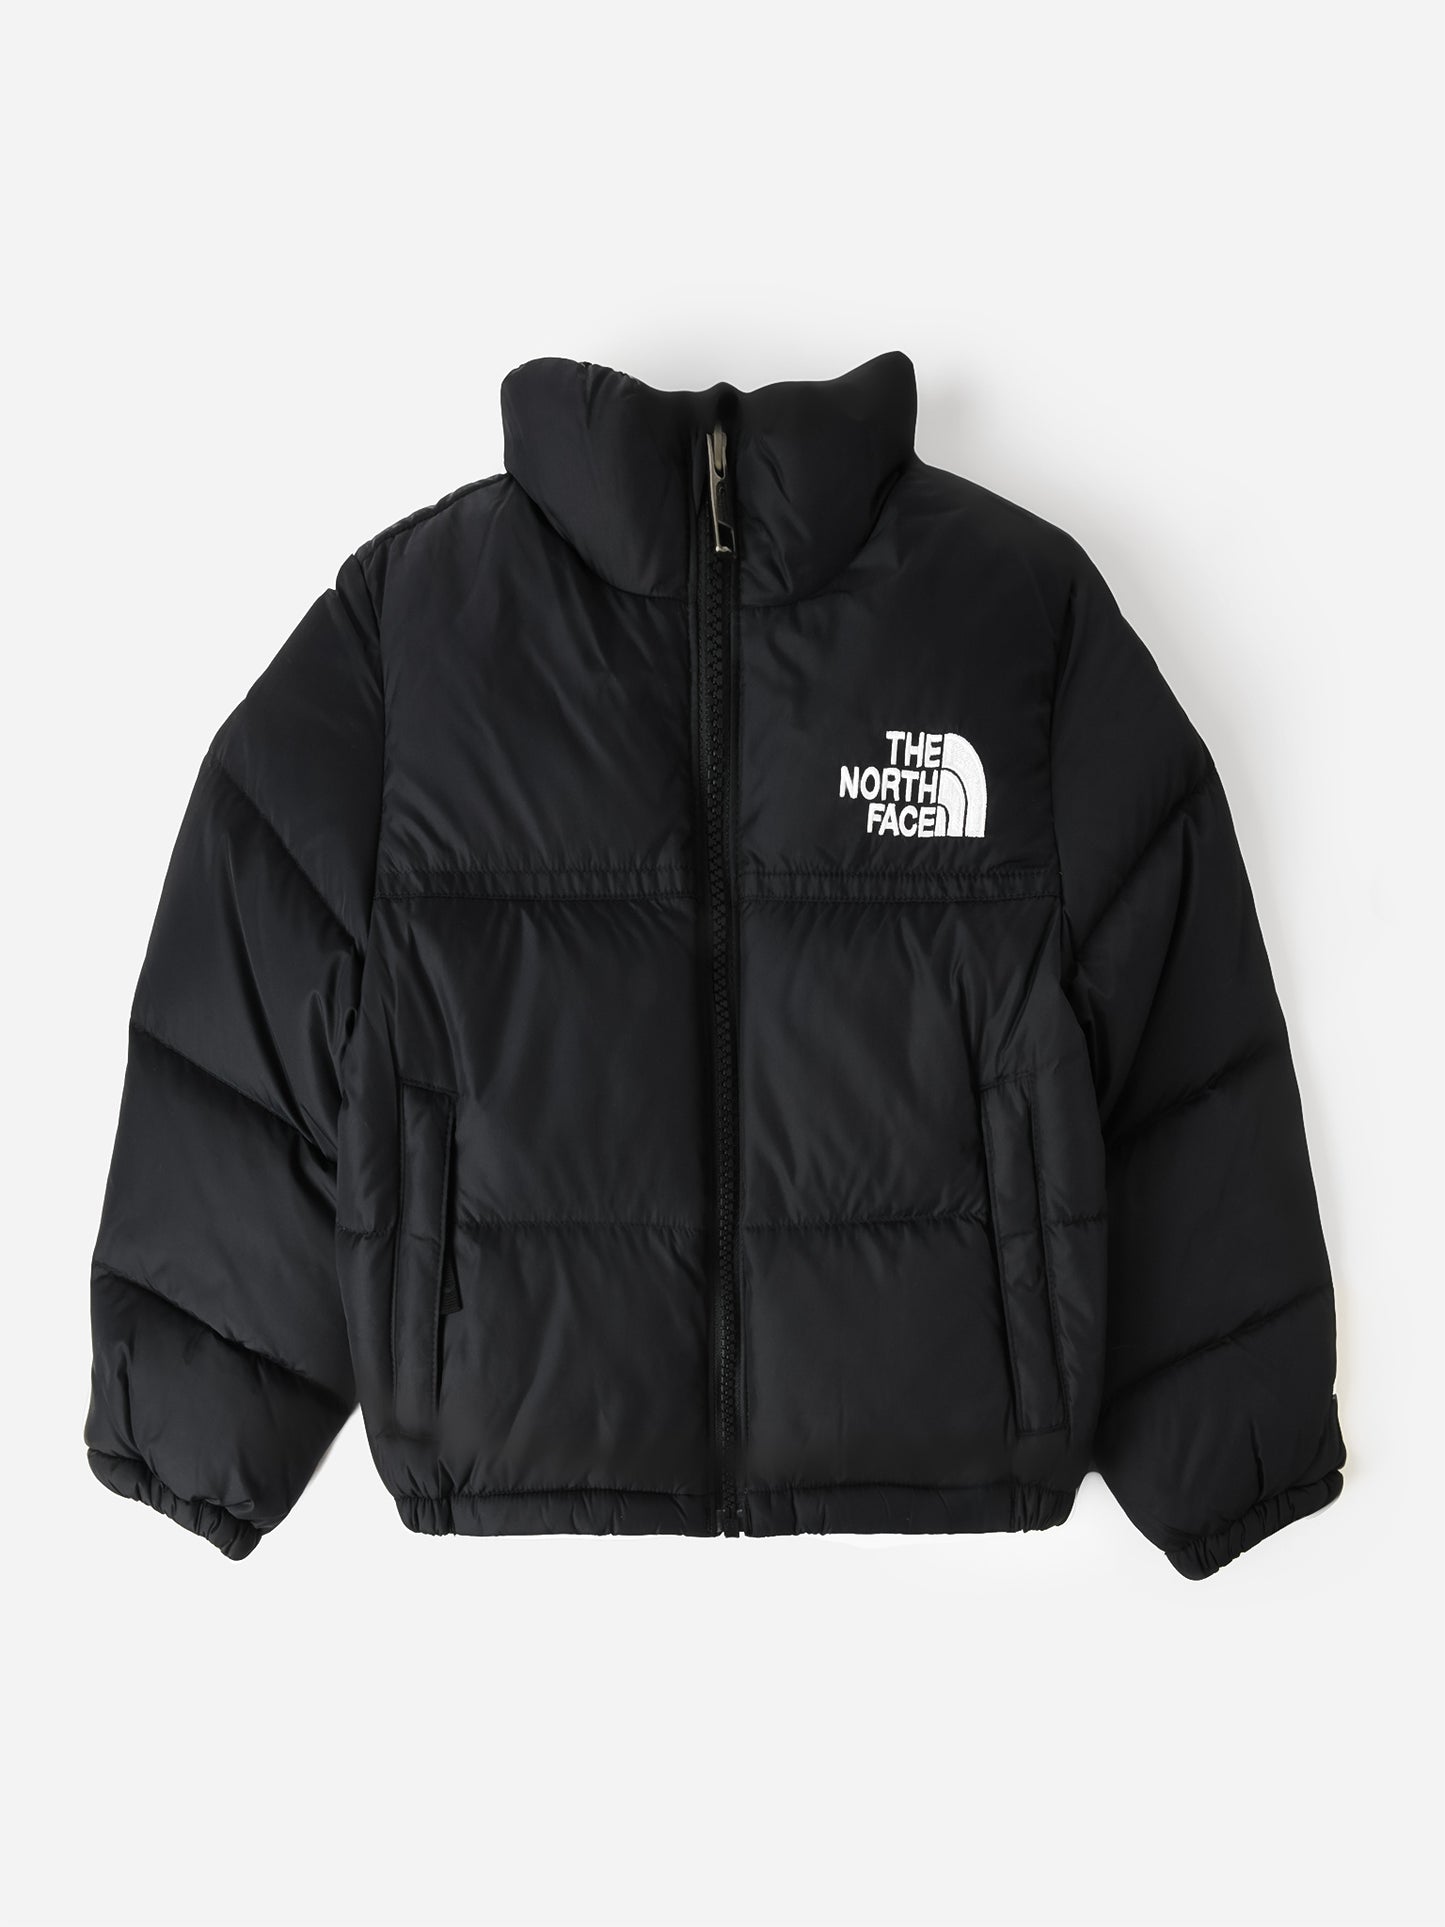 The North Face Kids' 1996 Retro Nuptse Jacket